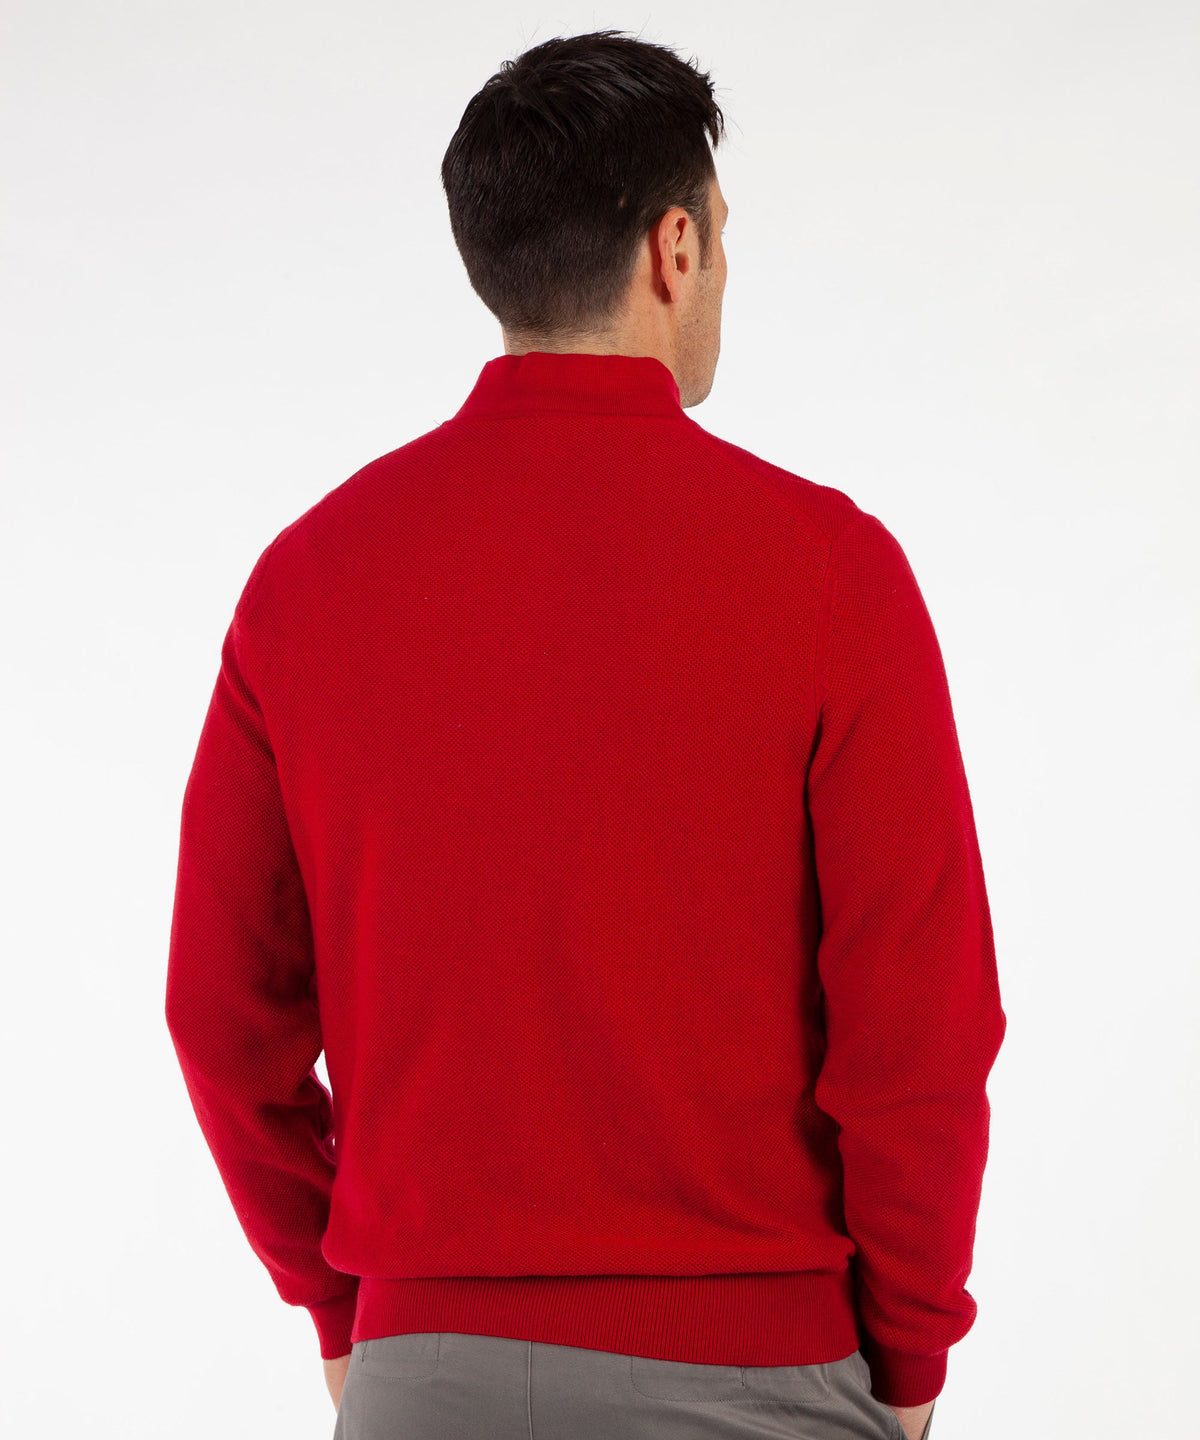 Signature 100% Merino Wool Tuck-Stitch Quarter-Zip Lined Wind Sweater